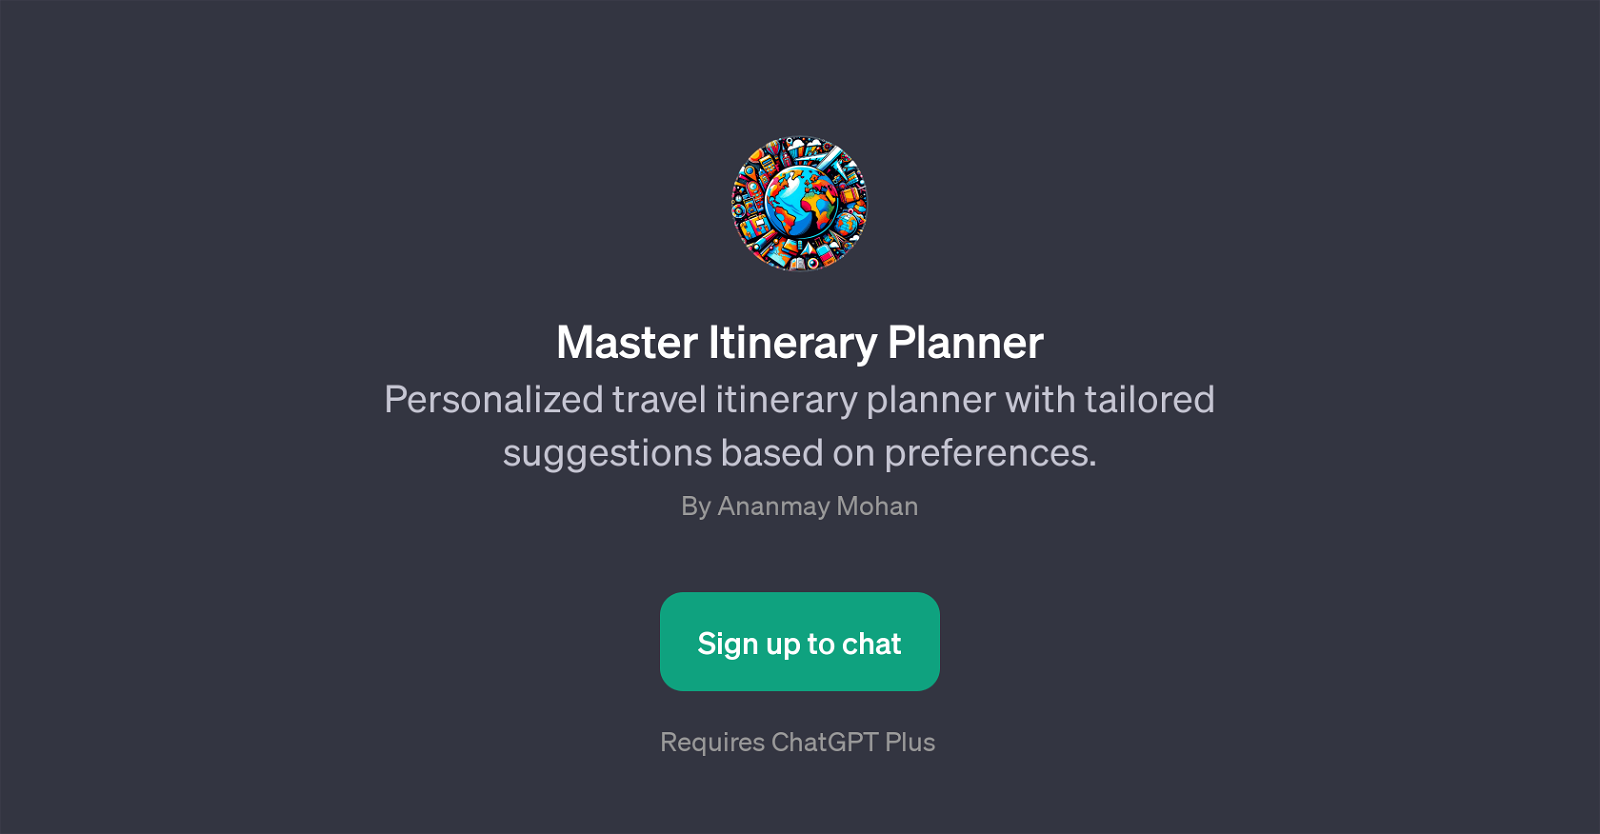 Master Itinerary Planner website